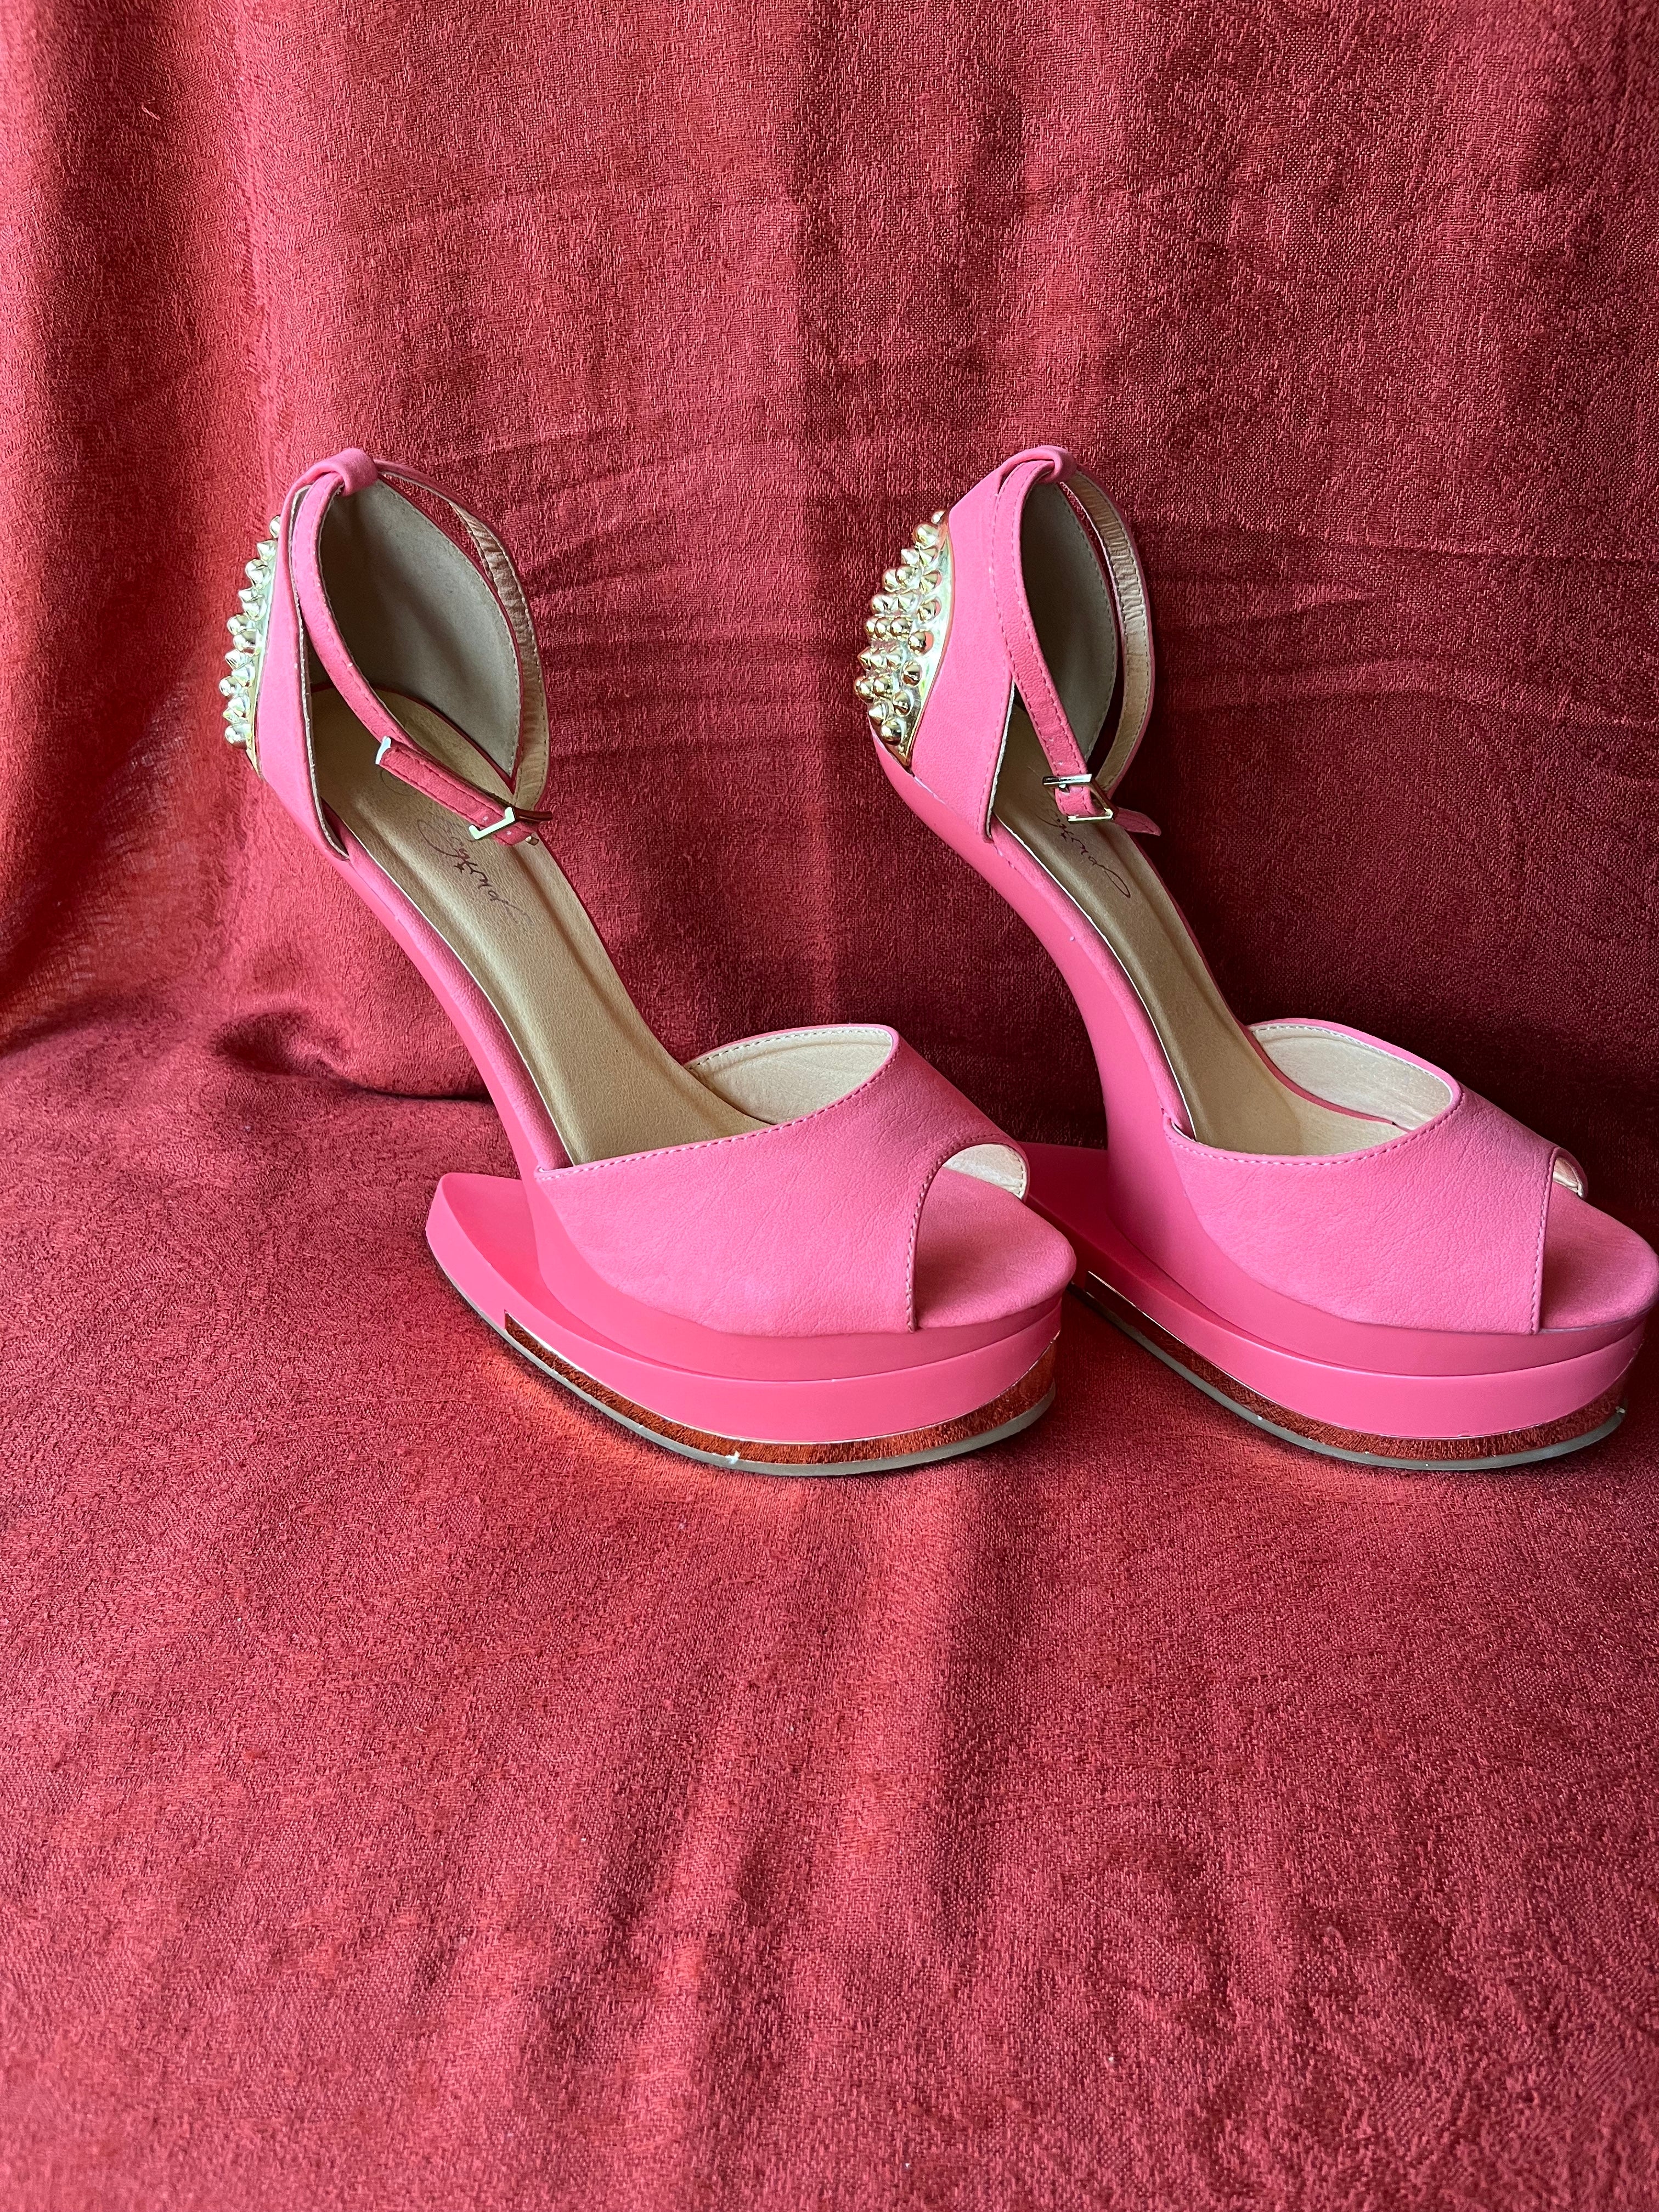 Camilla Skovgaar High Heels Size 38.5 item #40502 – ALL YOUR BLISS